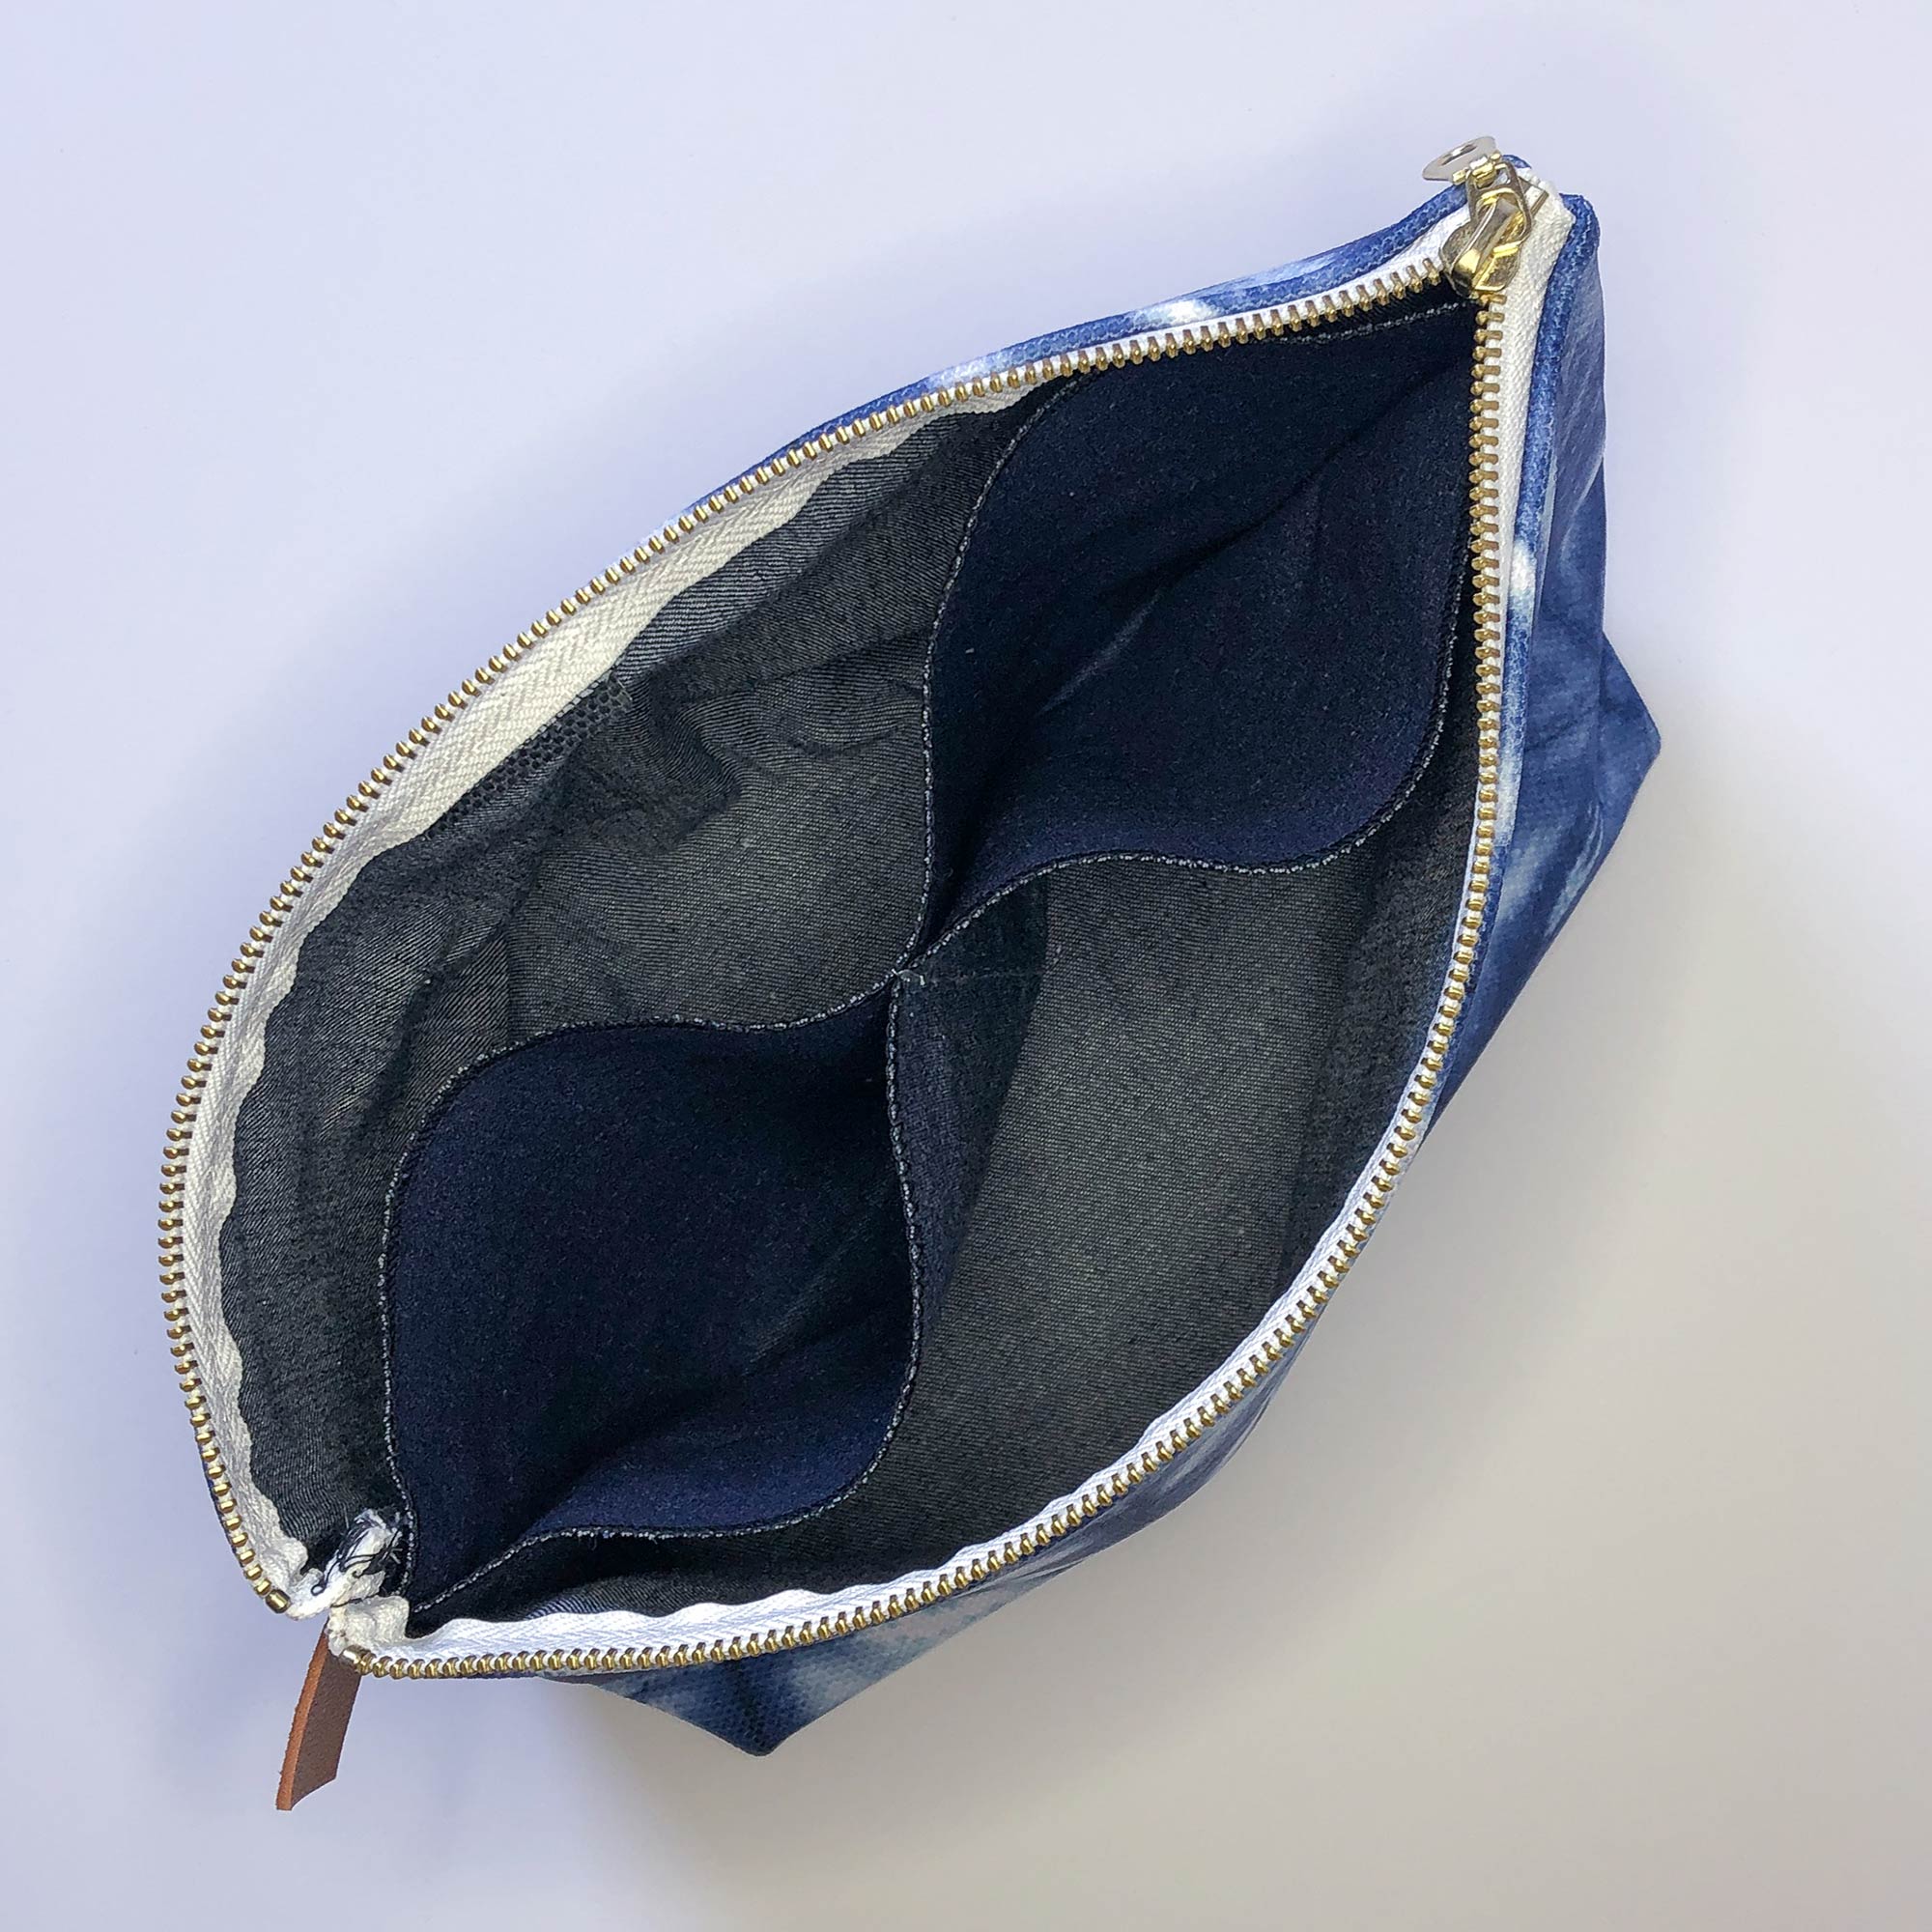 roomy inside of shibori project bag